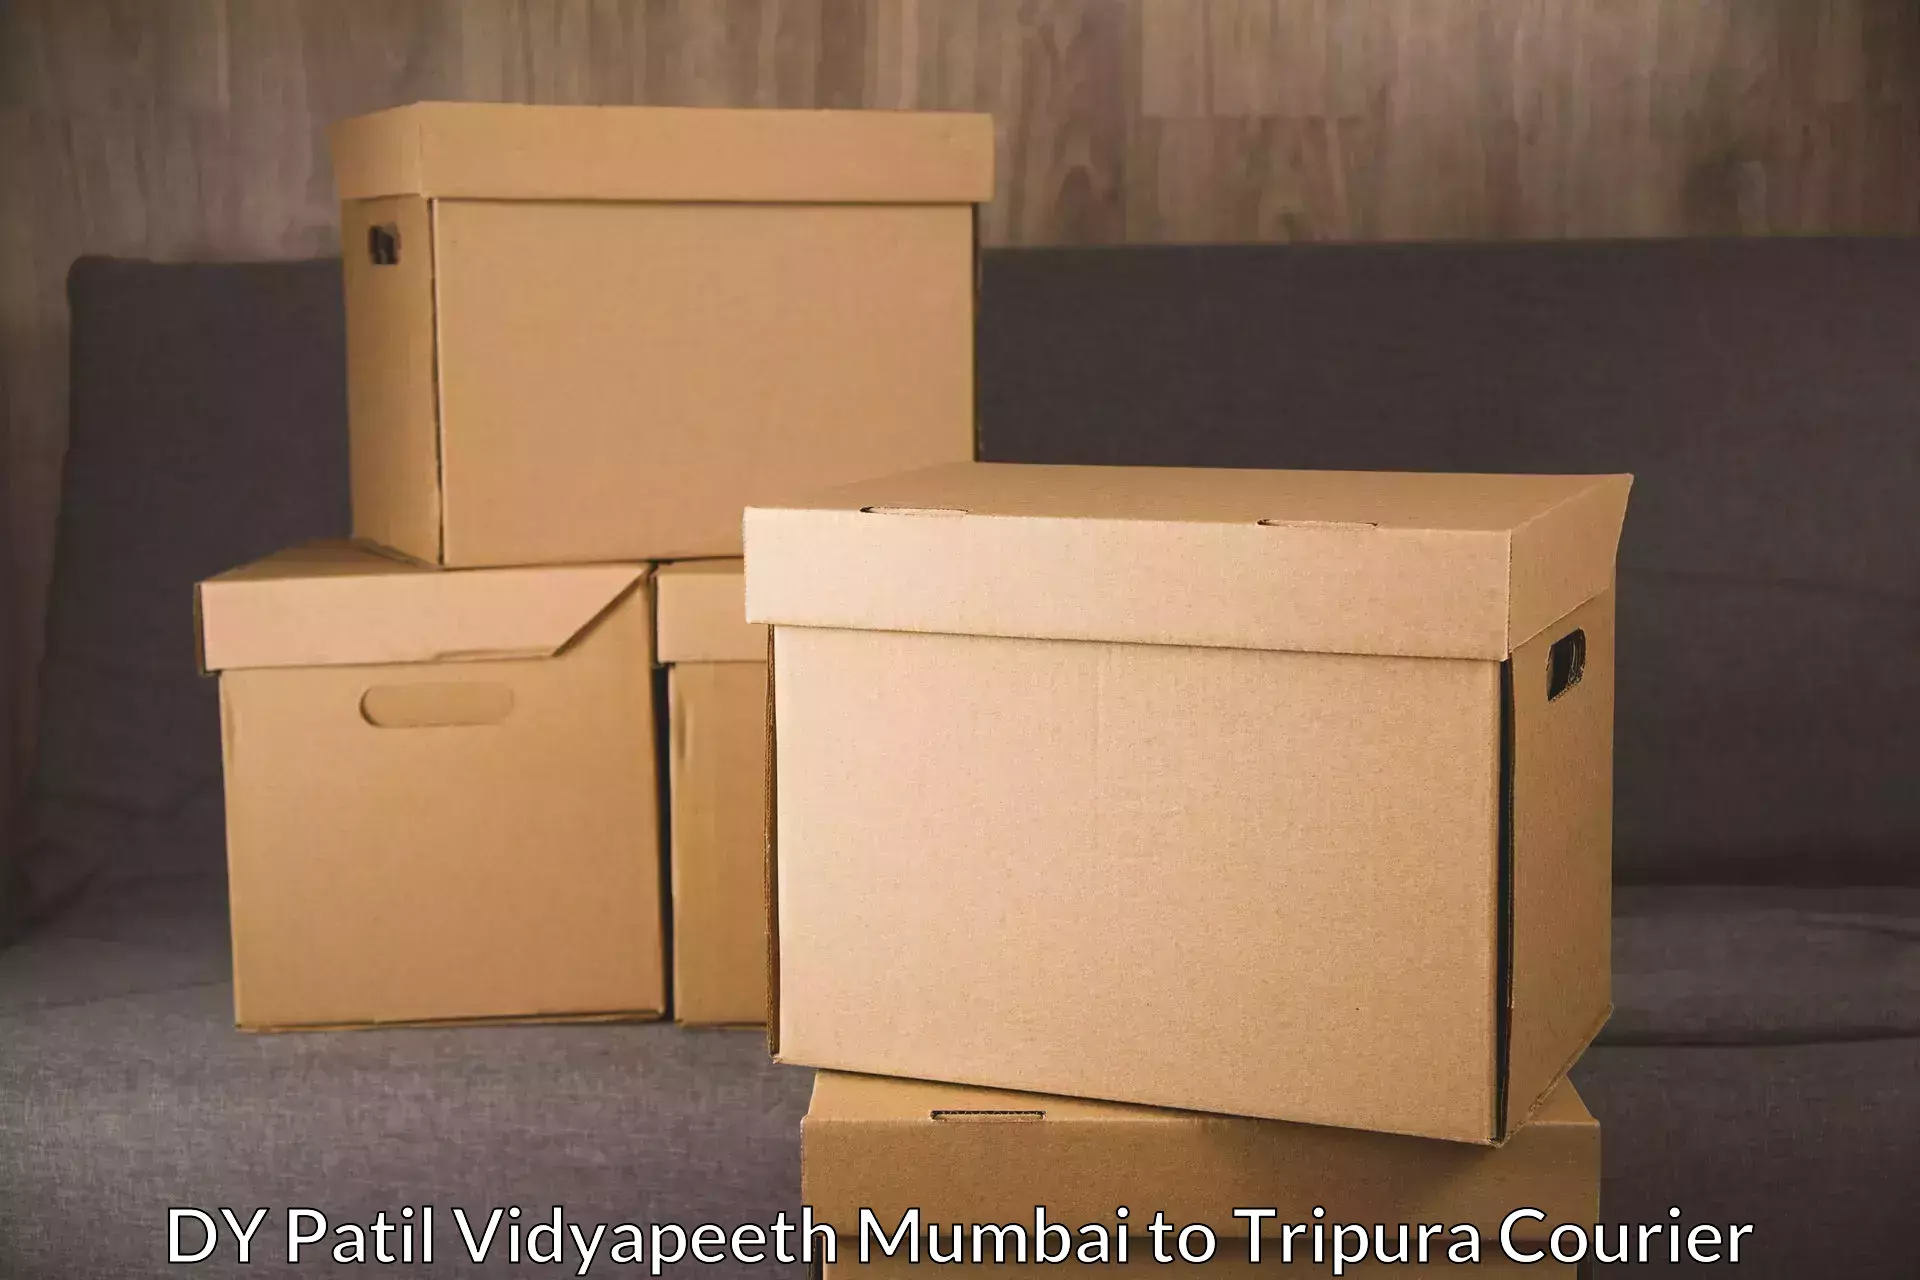 Efficient cargo handling in DY Patil Vidyapeeth Mumbai to Tripura